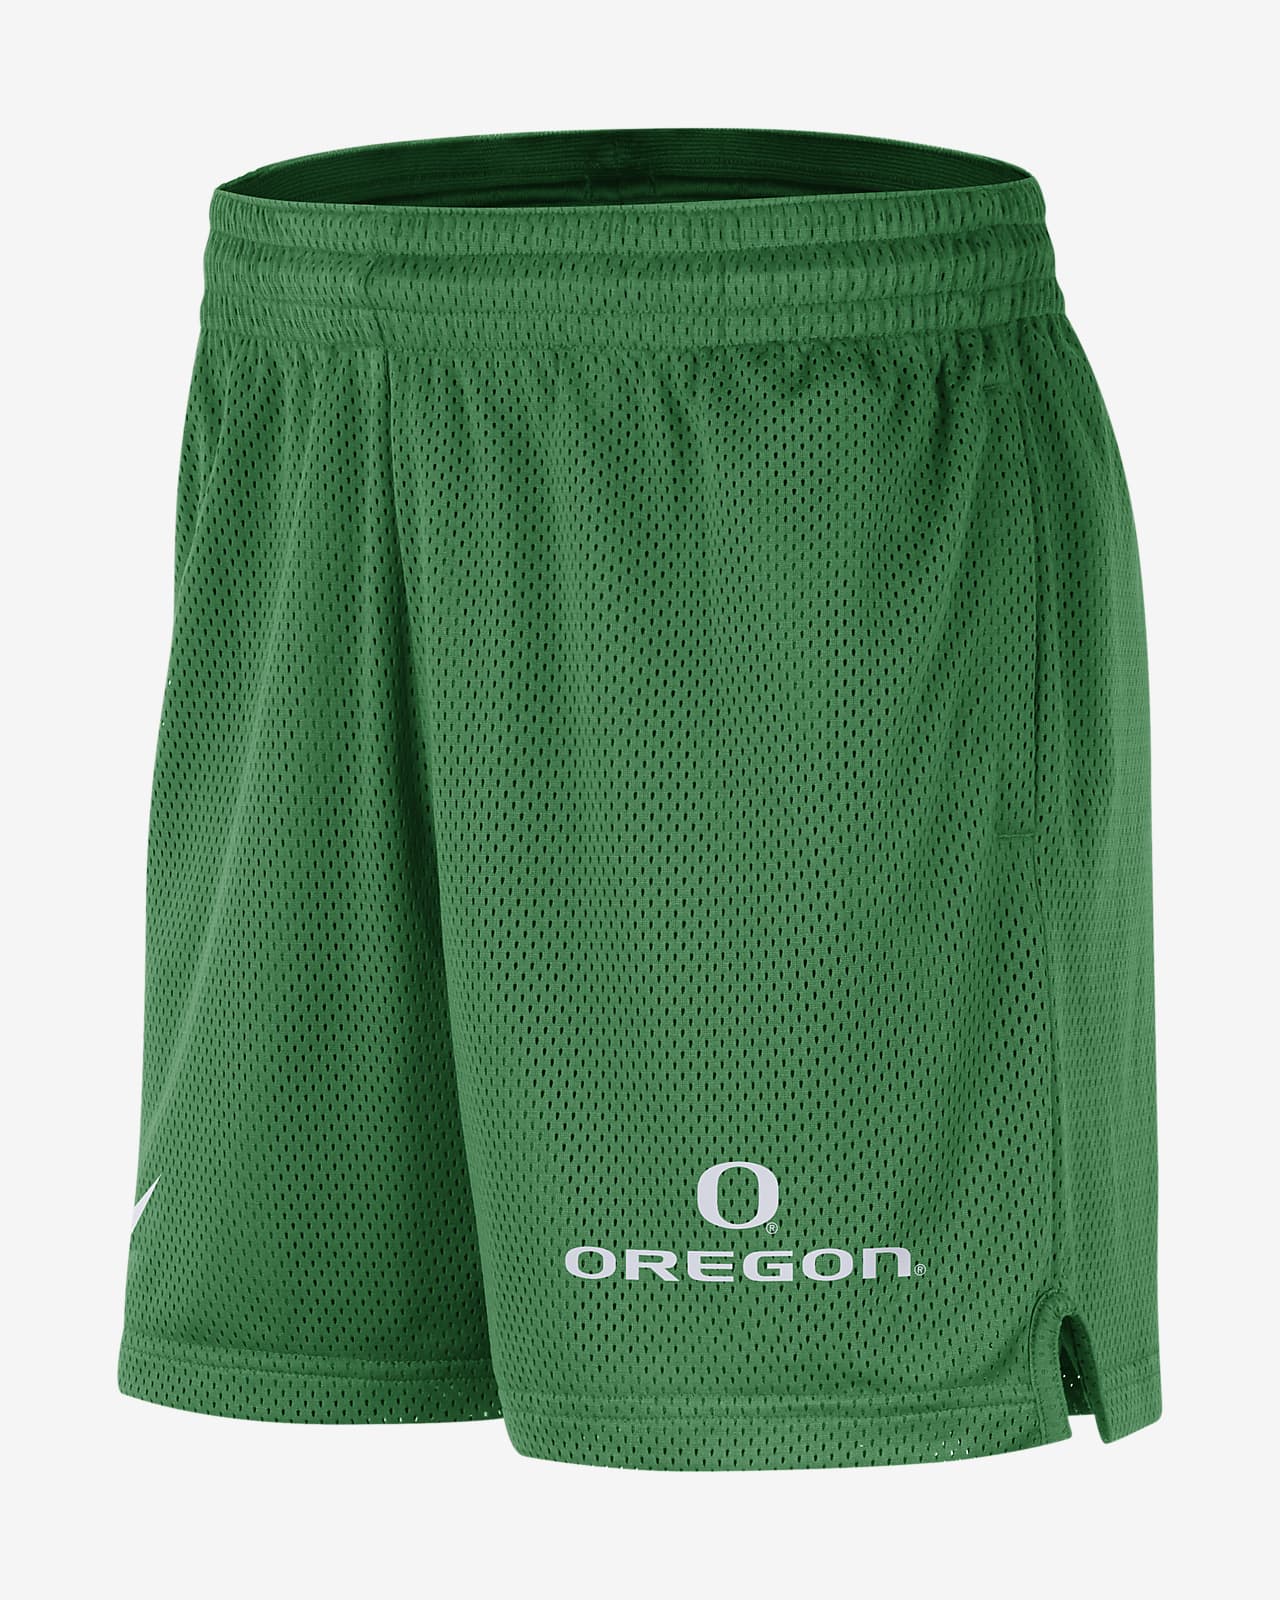 Shorts tejidos universitarios Nike Dri-FIT para hombre Oregon